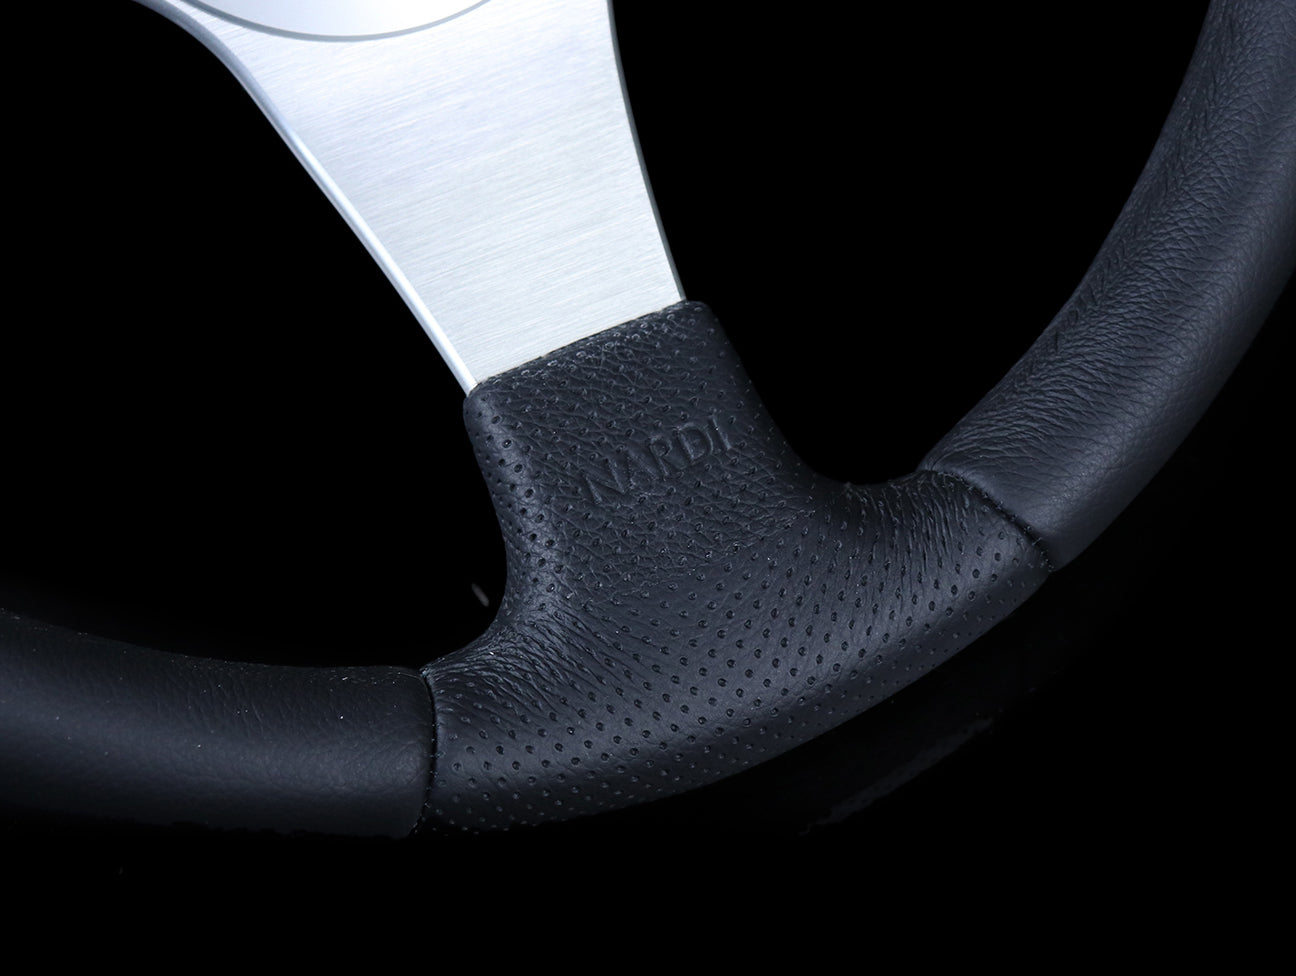 Nardi Basic 350mm Steering Wheel - Black Leather / Brushed Silver Spokes